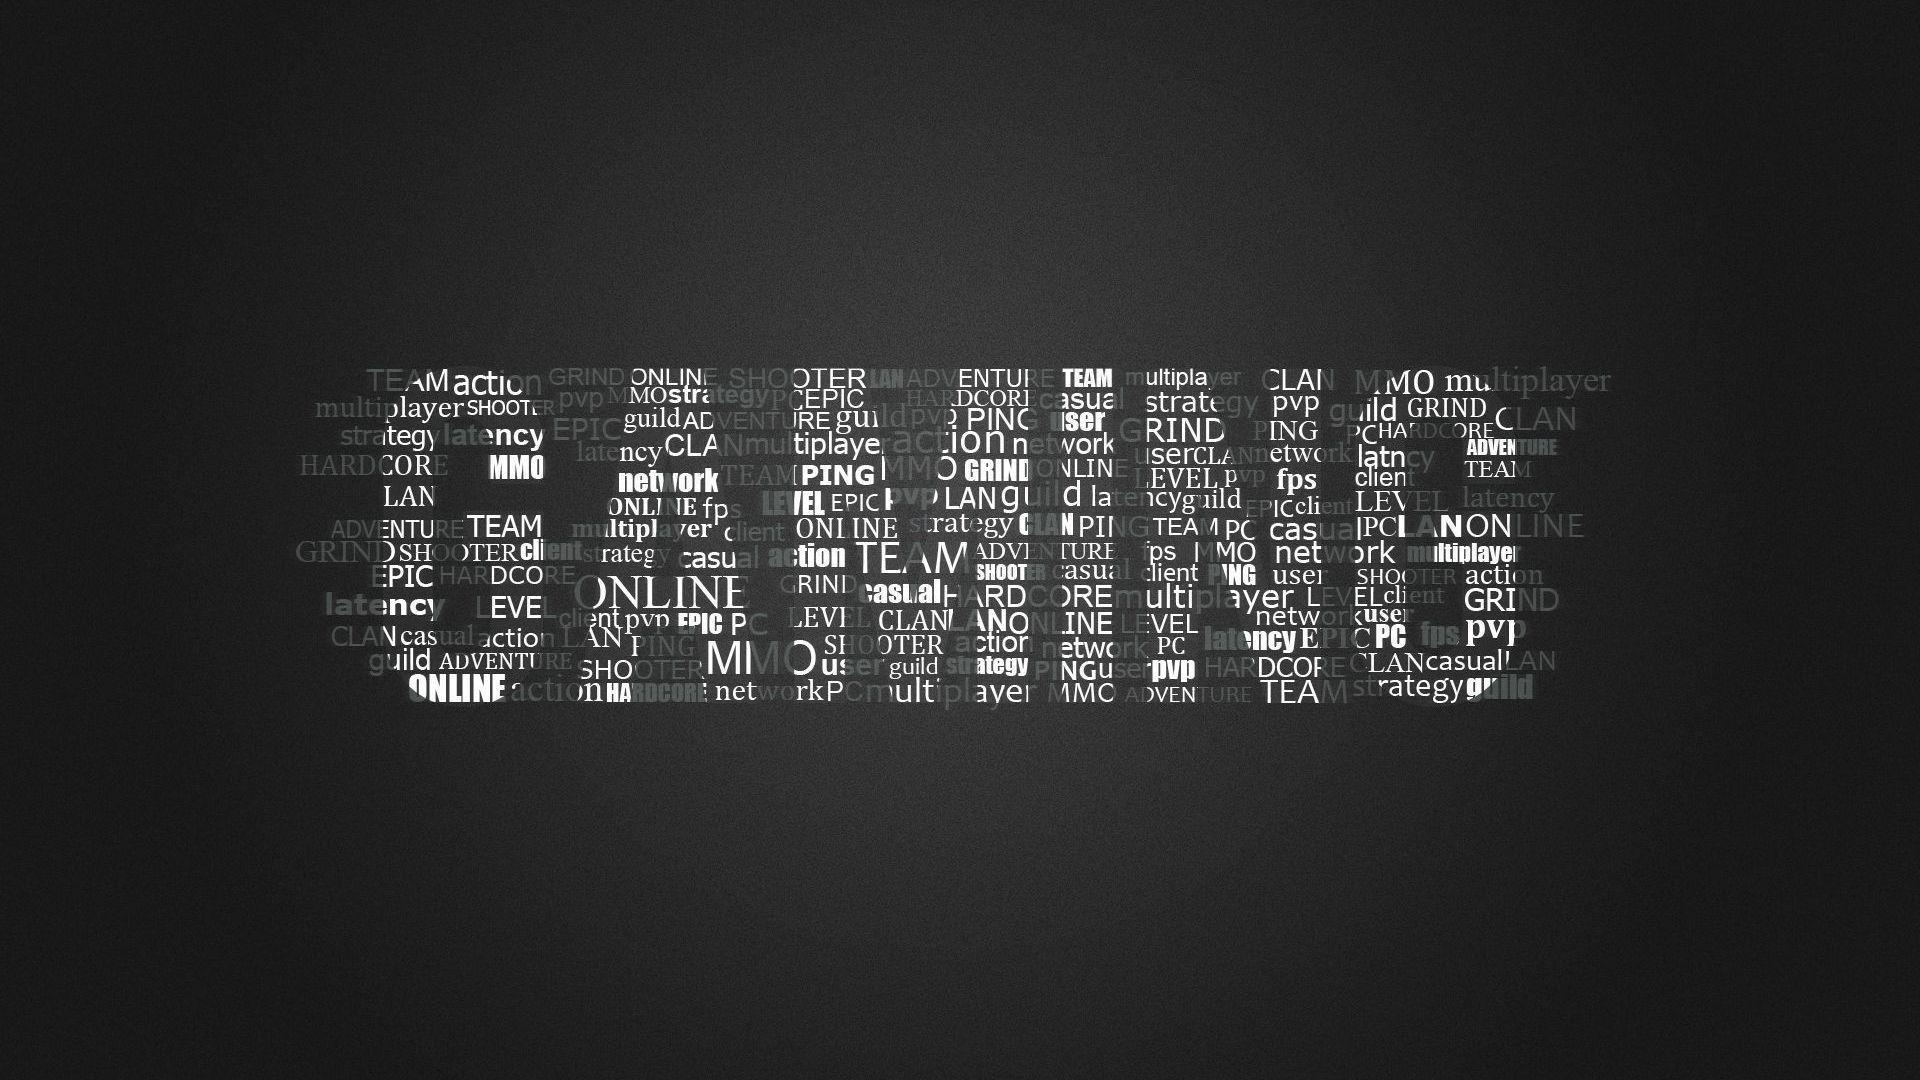 Gaming Logo Wallpaper. Wallpaper, Background, Image, Art Photo. Gaming wallpaper, Best gaming wallpaper, Wallpaper pc